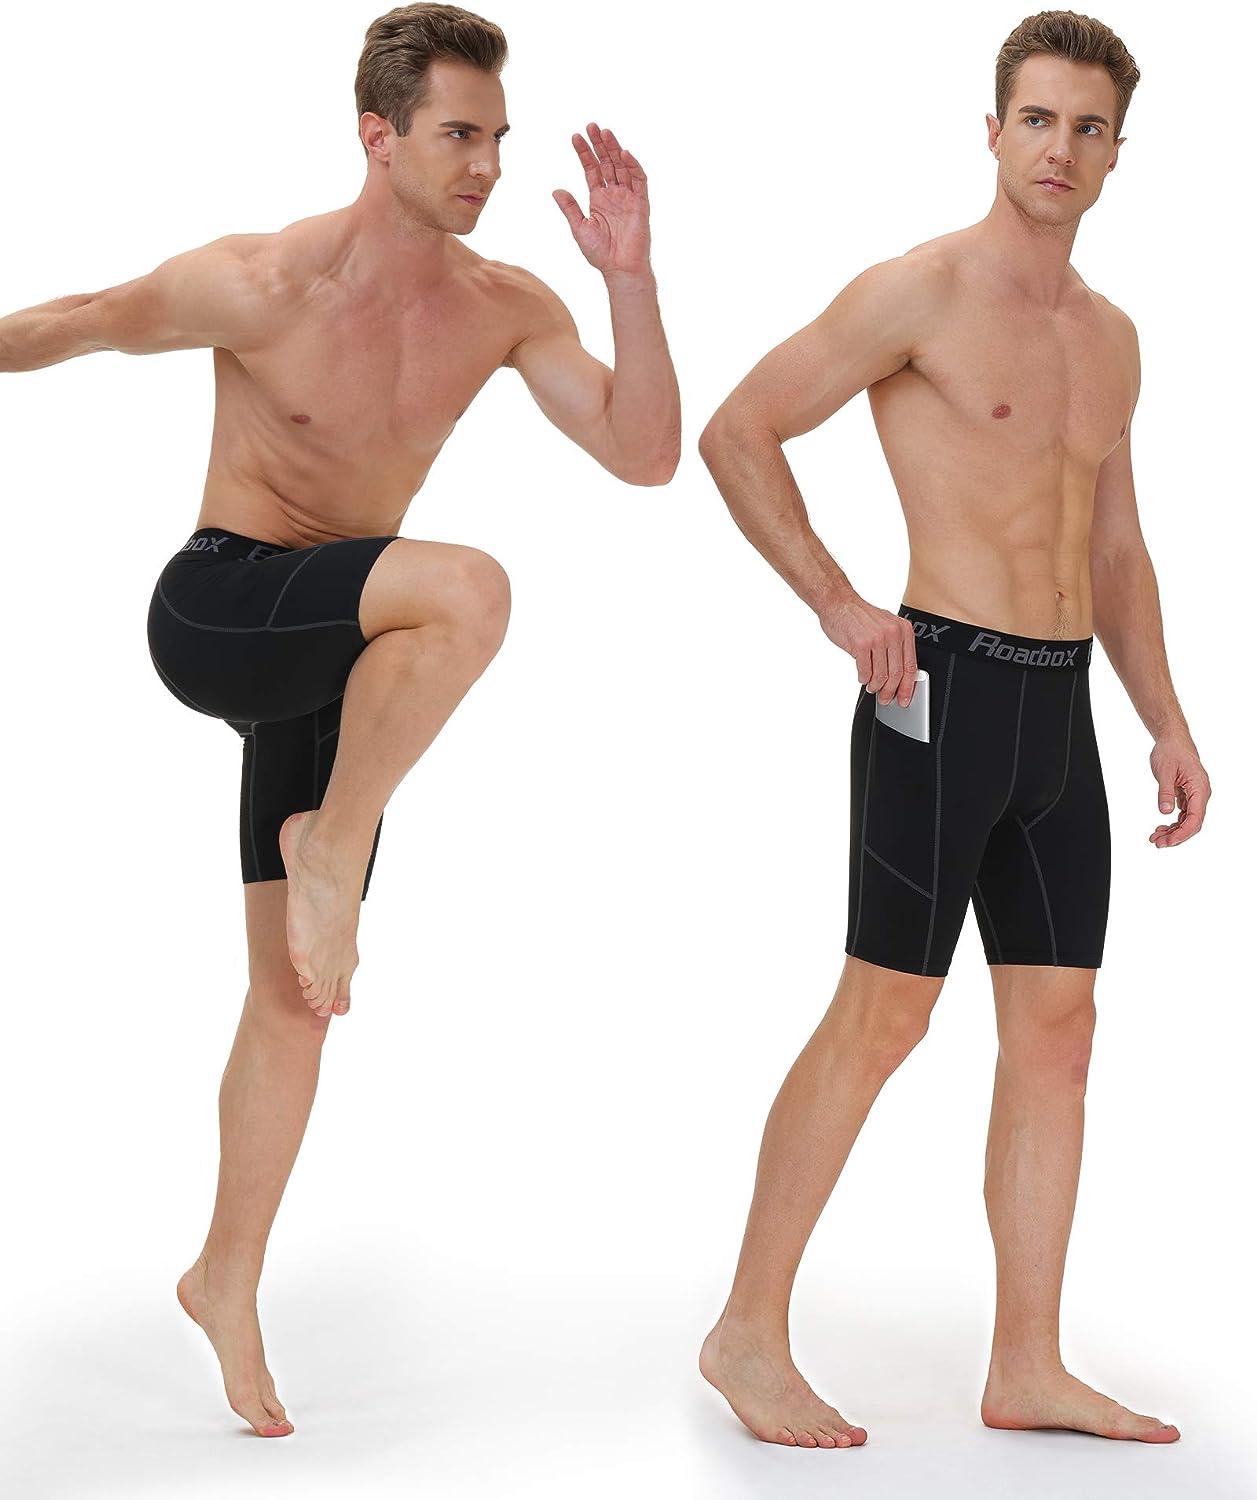 Men's Abdominal Shorts Body Shaper Compression High Waist Trainer